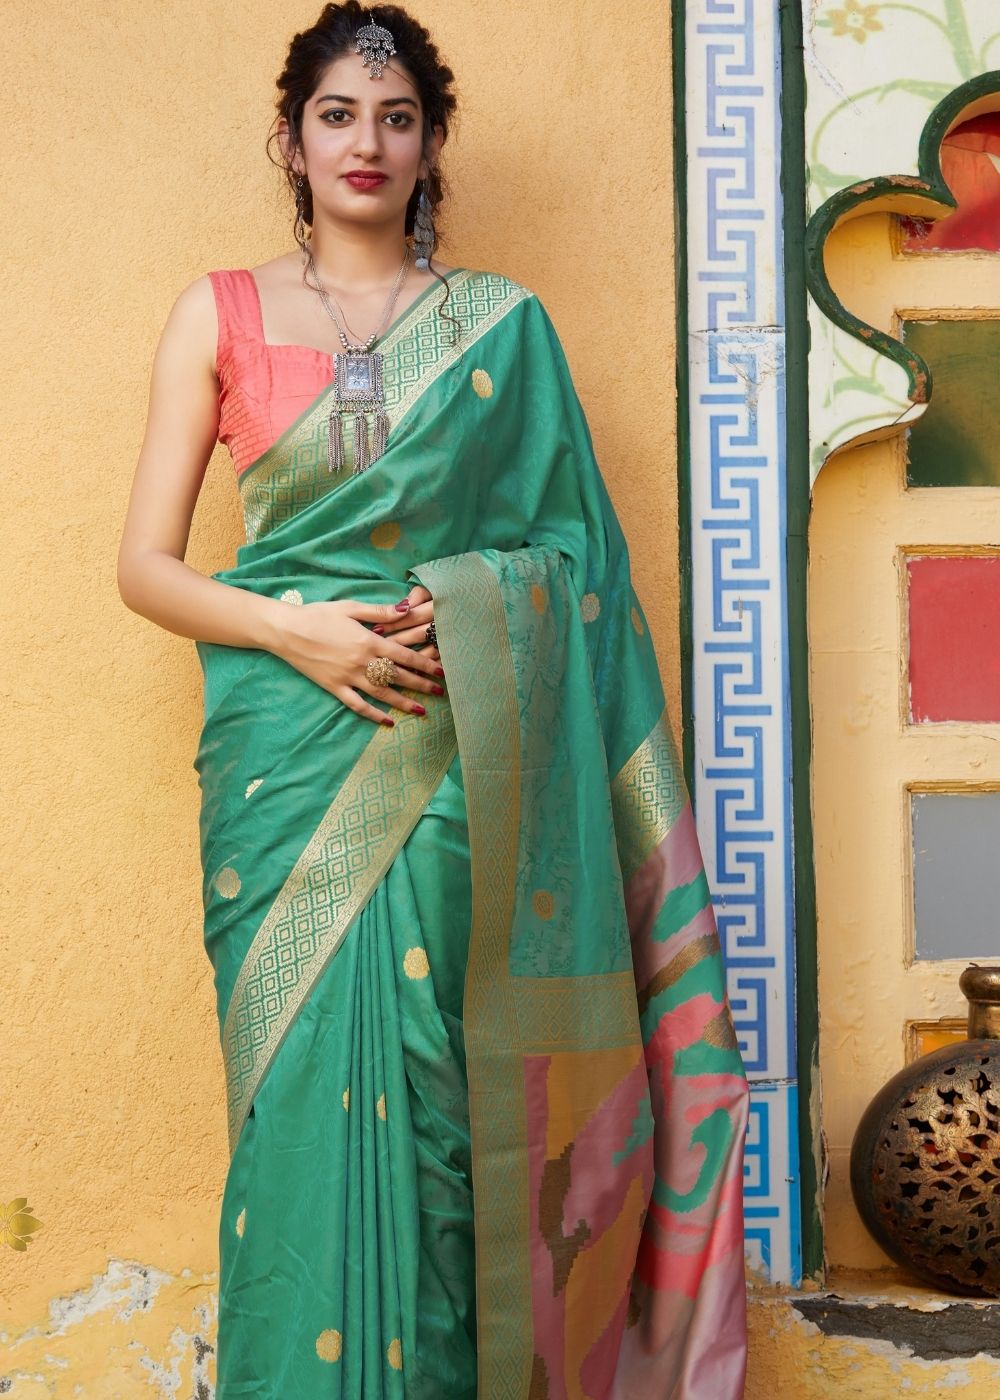 Mint Green Silk Saree with Zari Border and Abstract Digital Print on Pallu - Colorful Saree